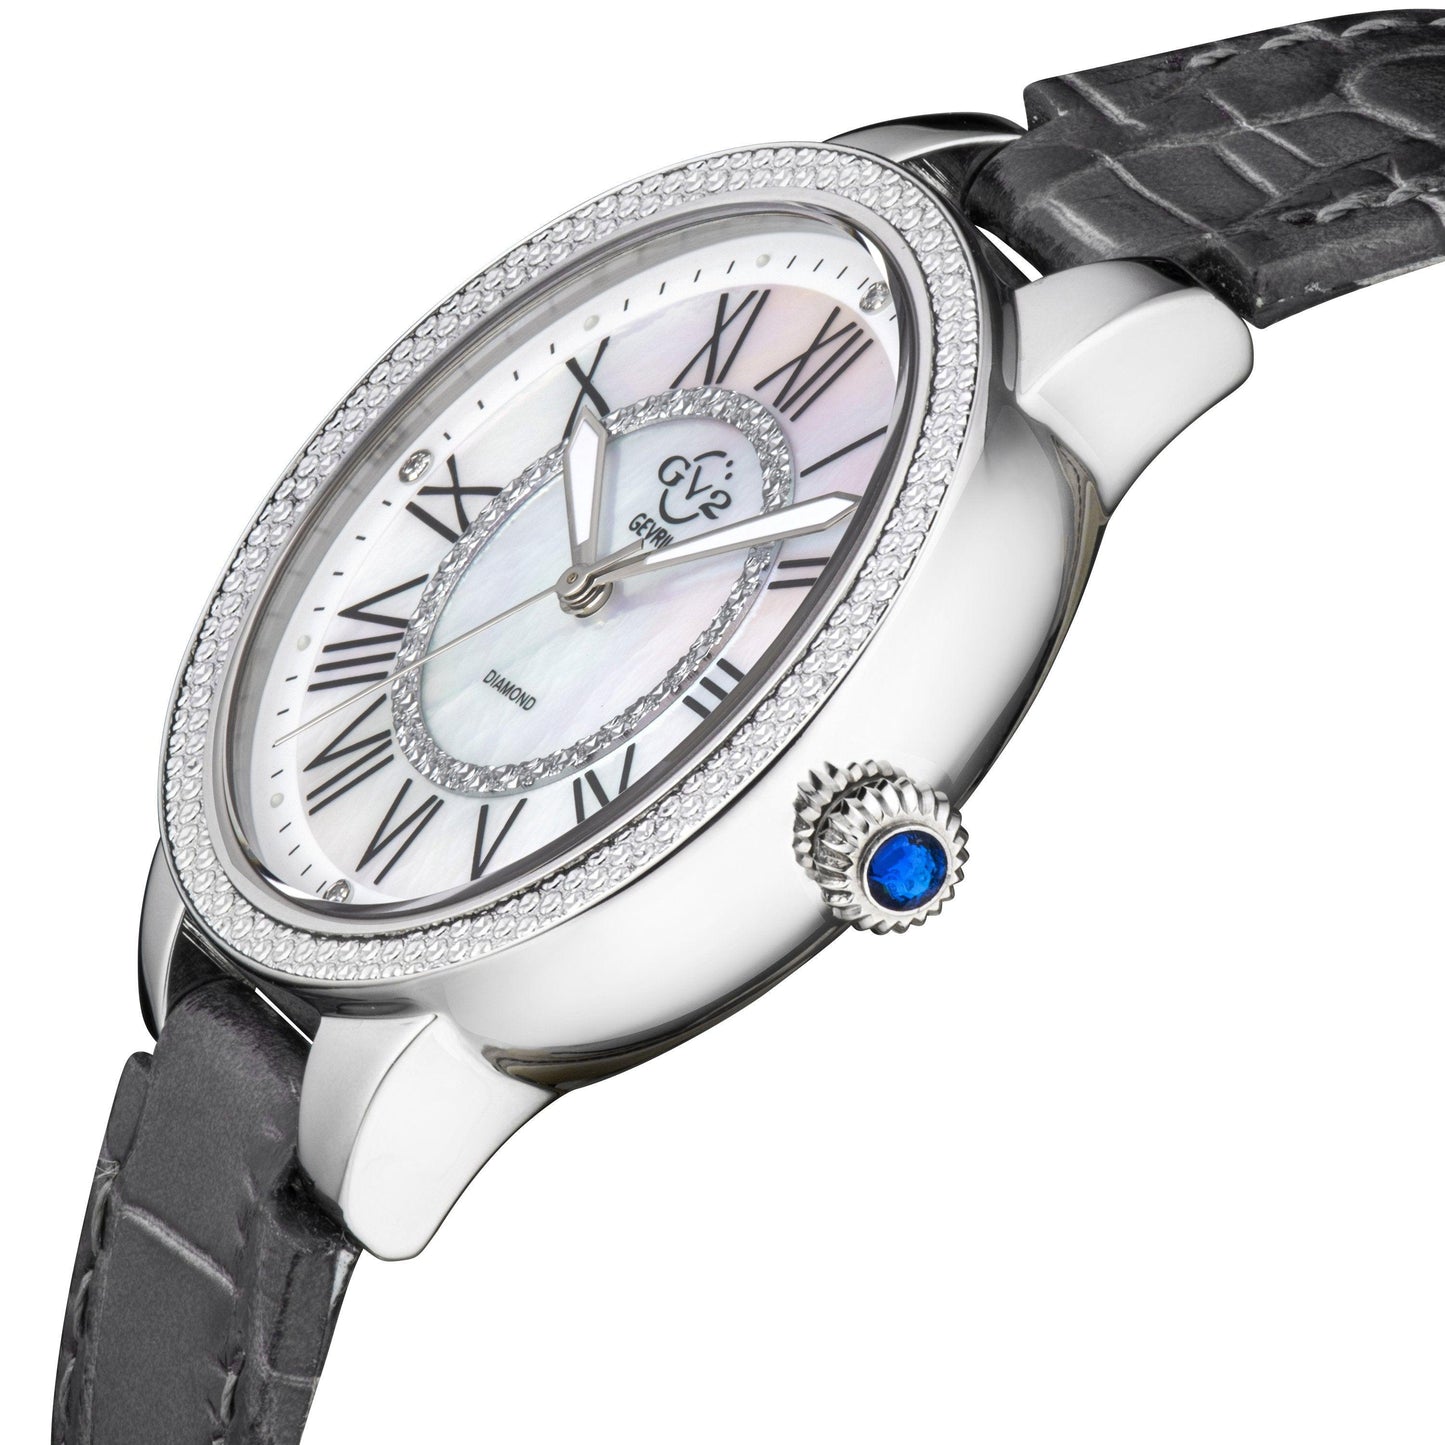 Gevril-Luxury-Swiss-Watches-GV2 Astor II Diamond-9140-L9